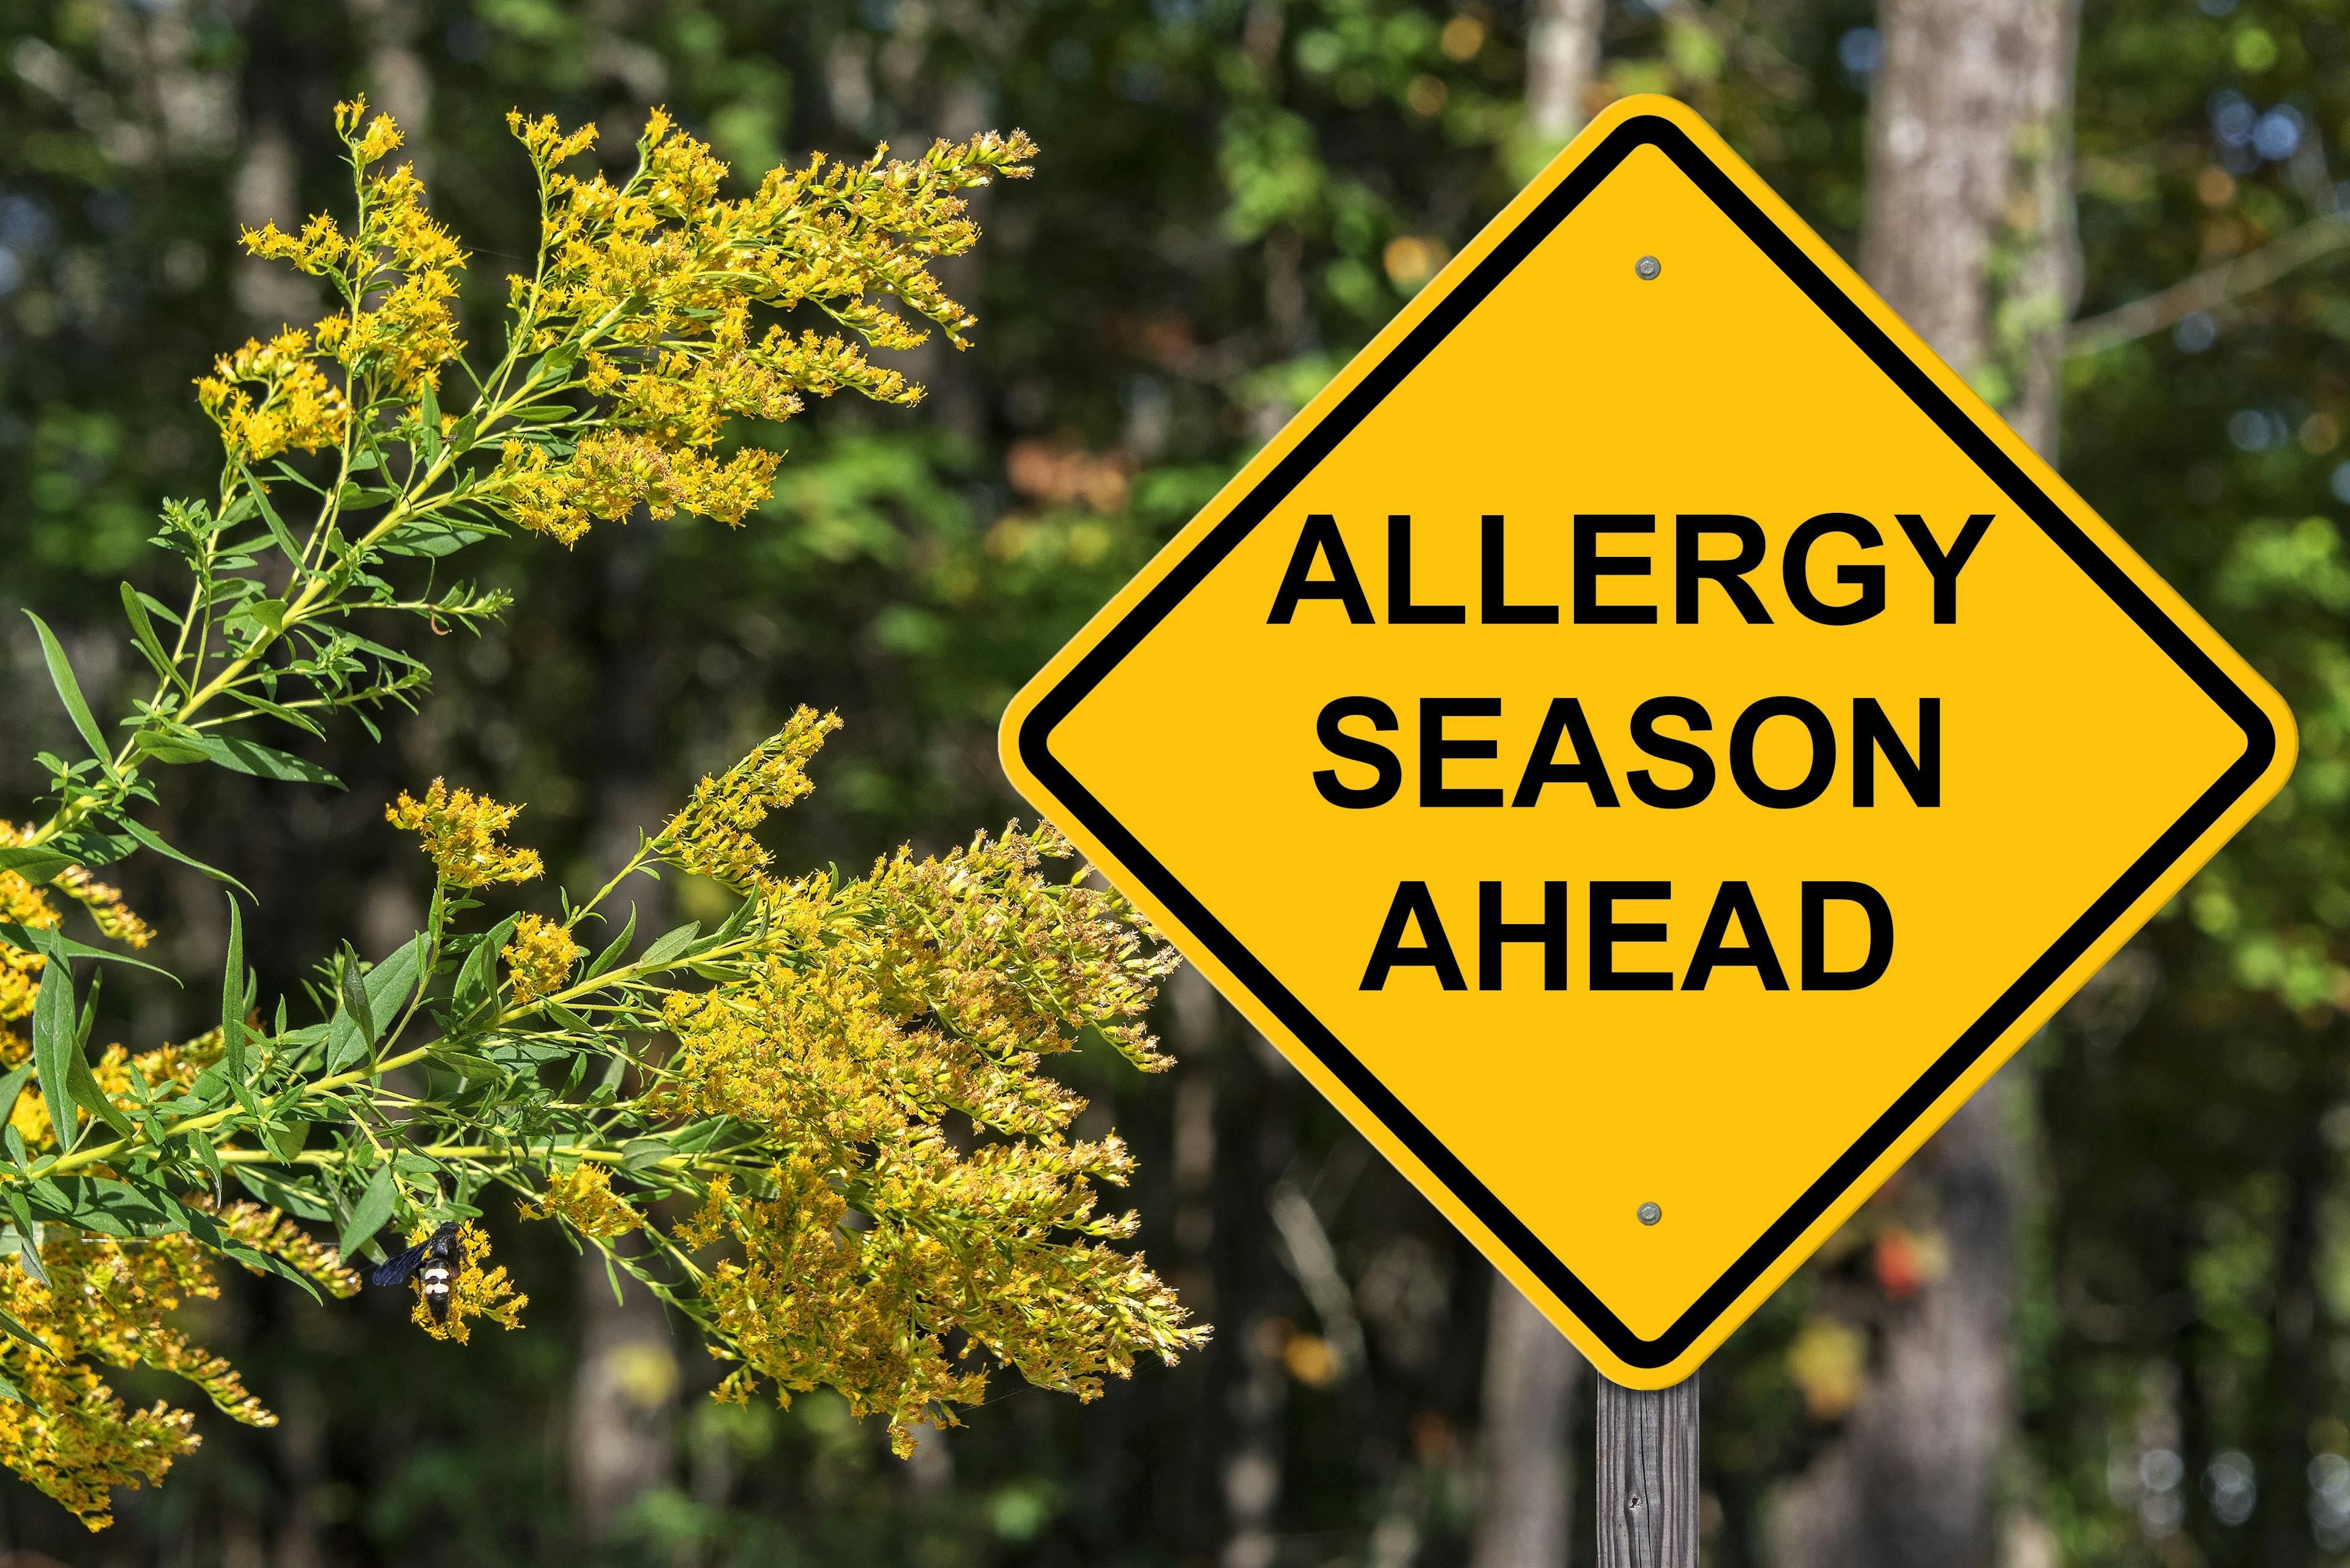 Caution: Allergy season ahead - Image credit: Jim Vallee - stock.adobe.com